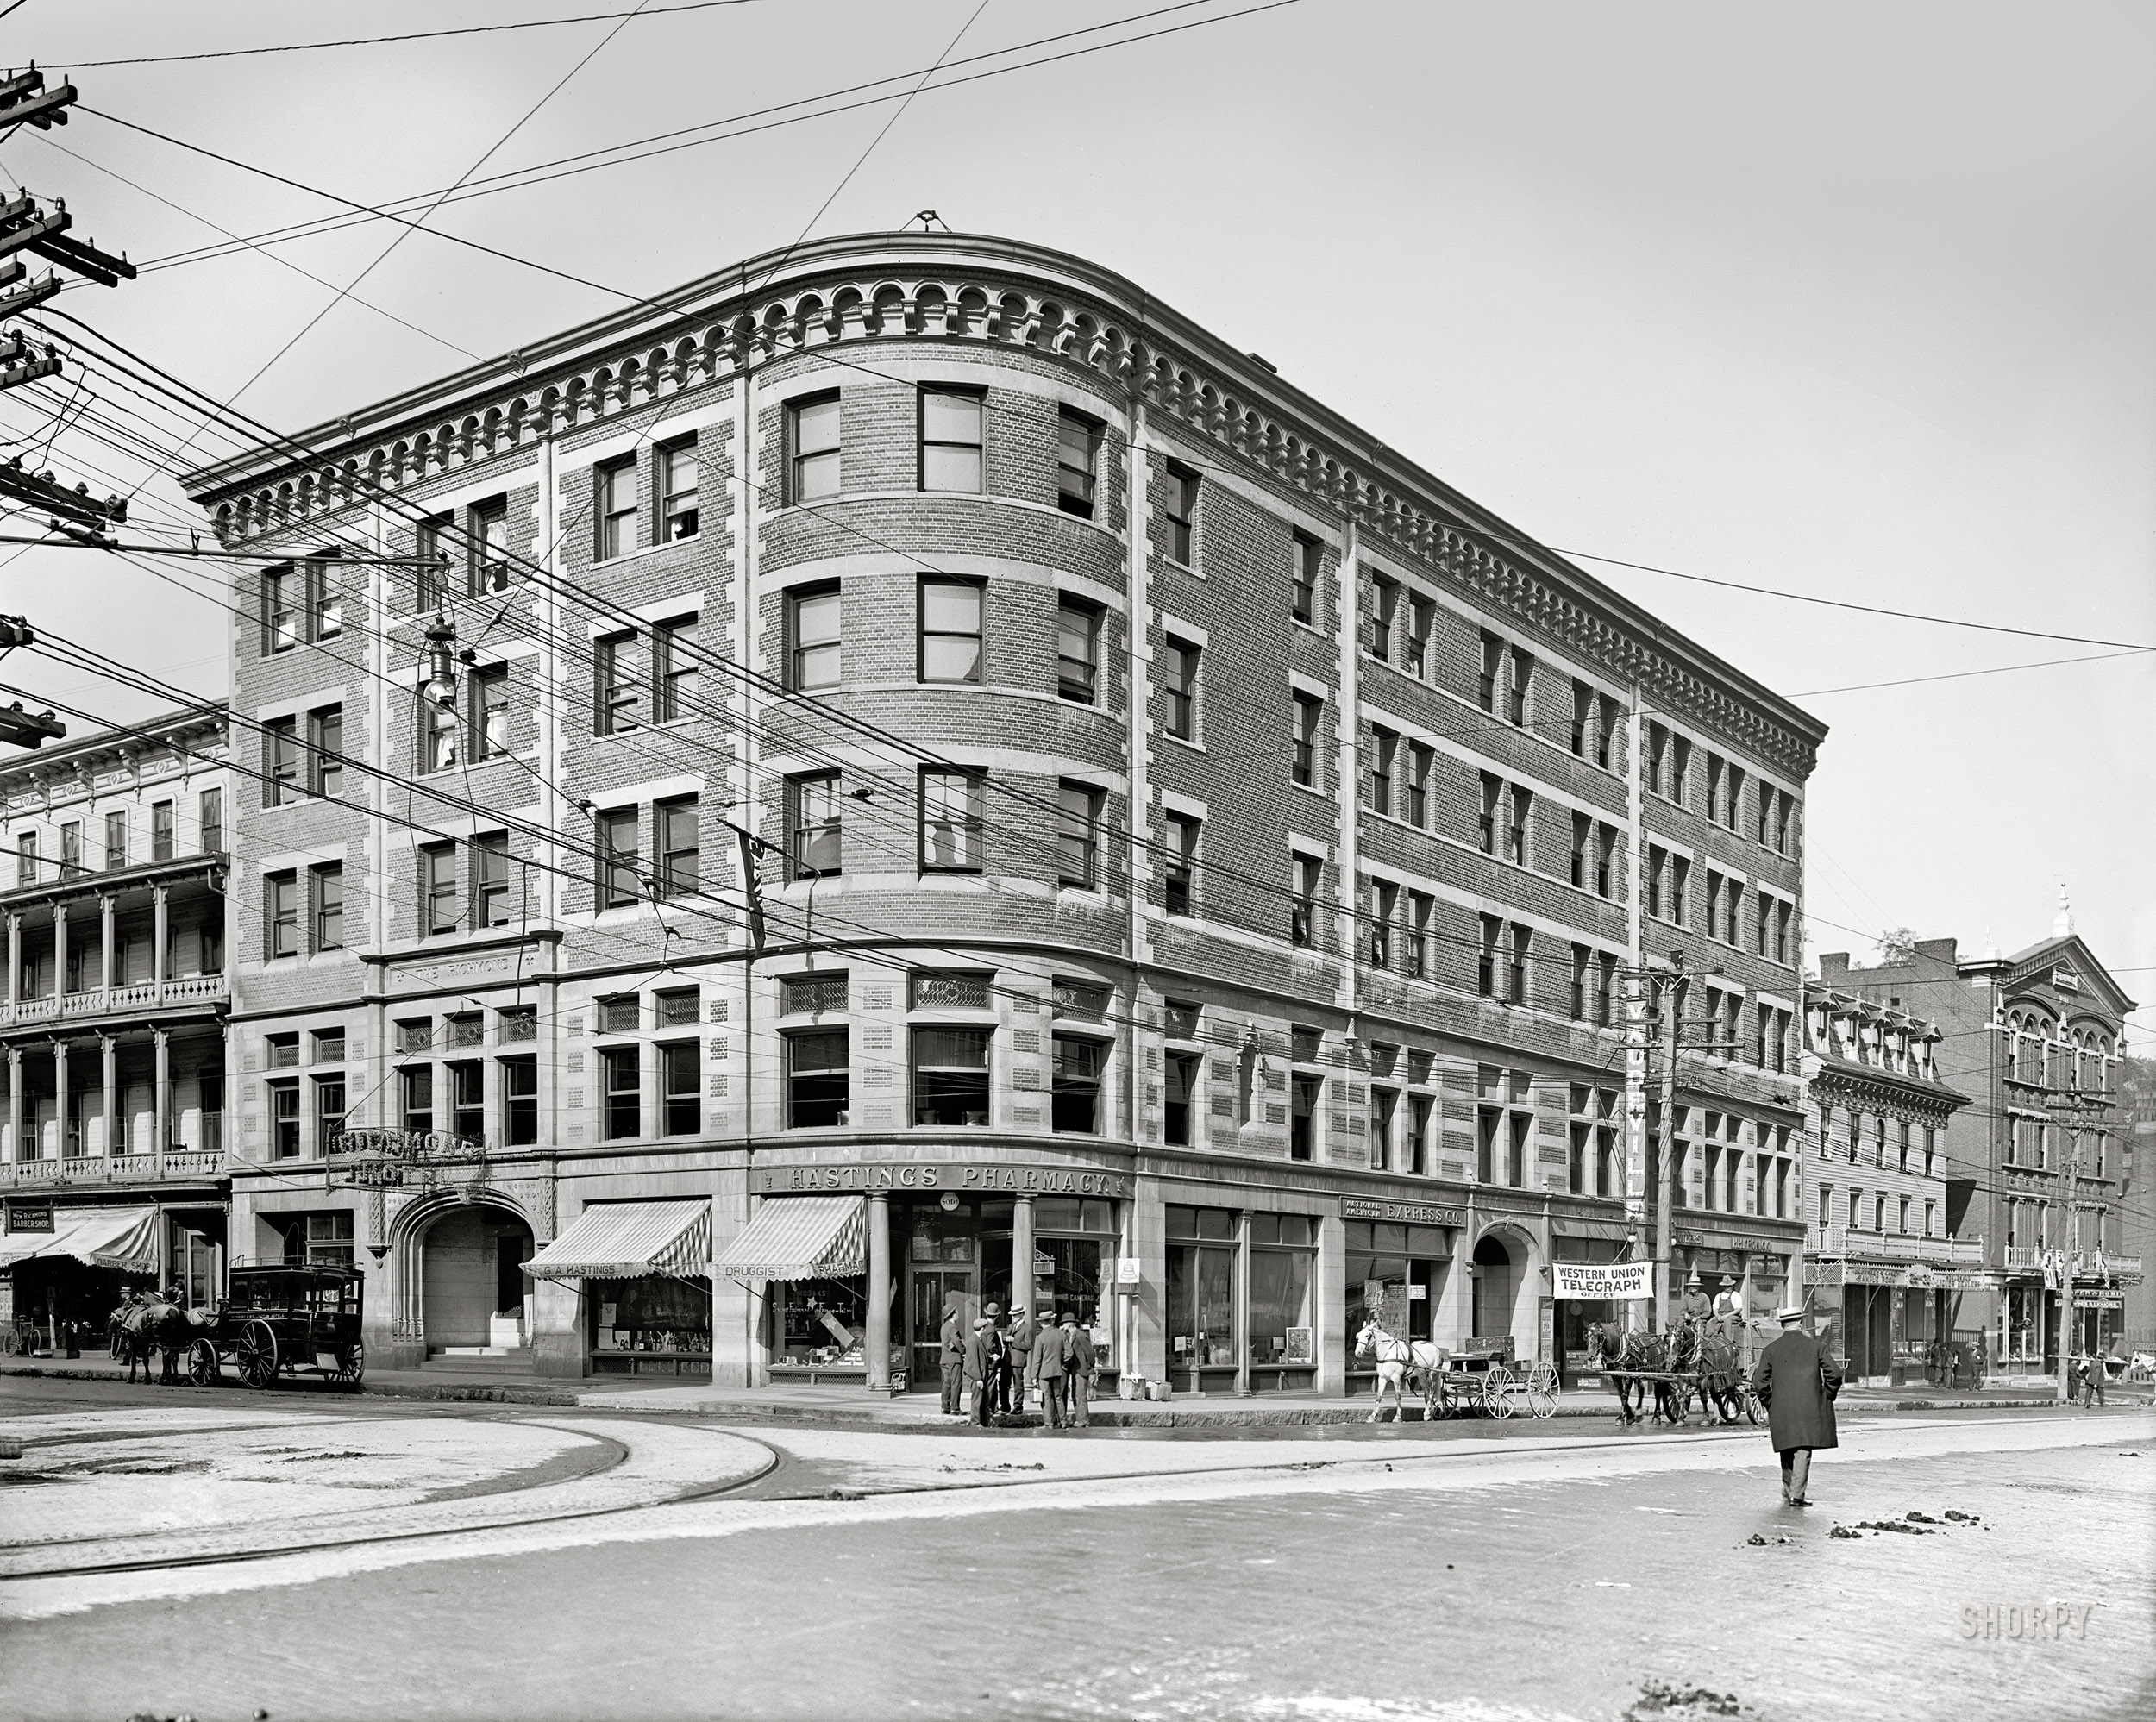 North Adams, Massachusetts, circa 1908. "Richmond Hotel, Main Street." 8x10 inch dry plate glass negative, Detroit Publishing Company. View full size.